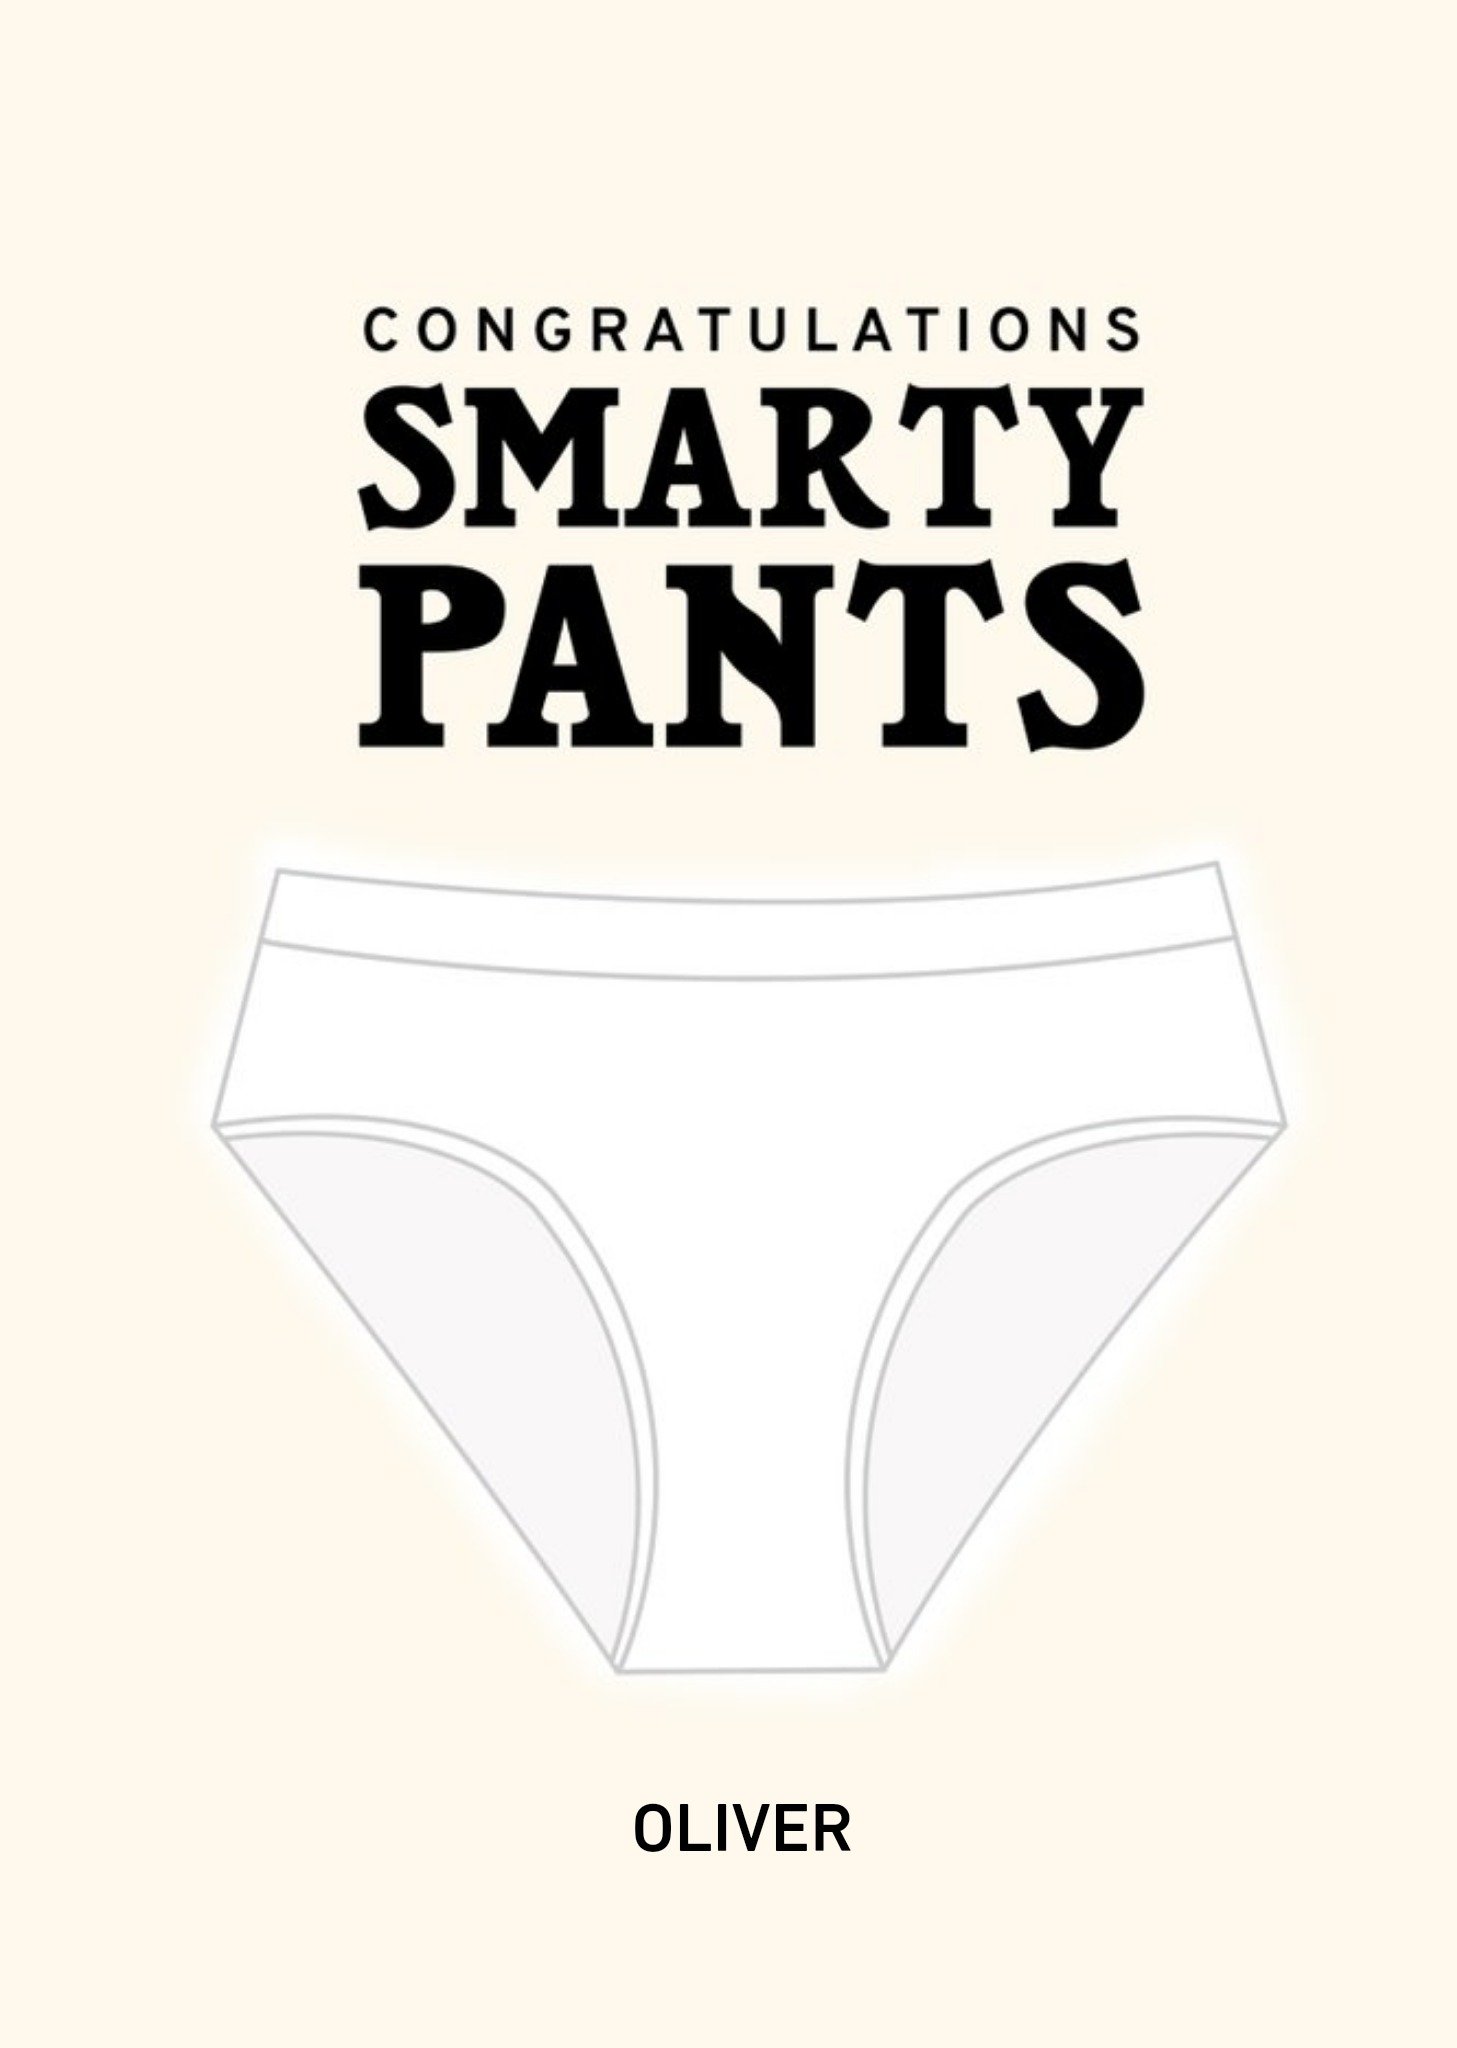 Moonpig Fun Smarty Pants Exams Congratulations Card, Large